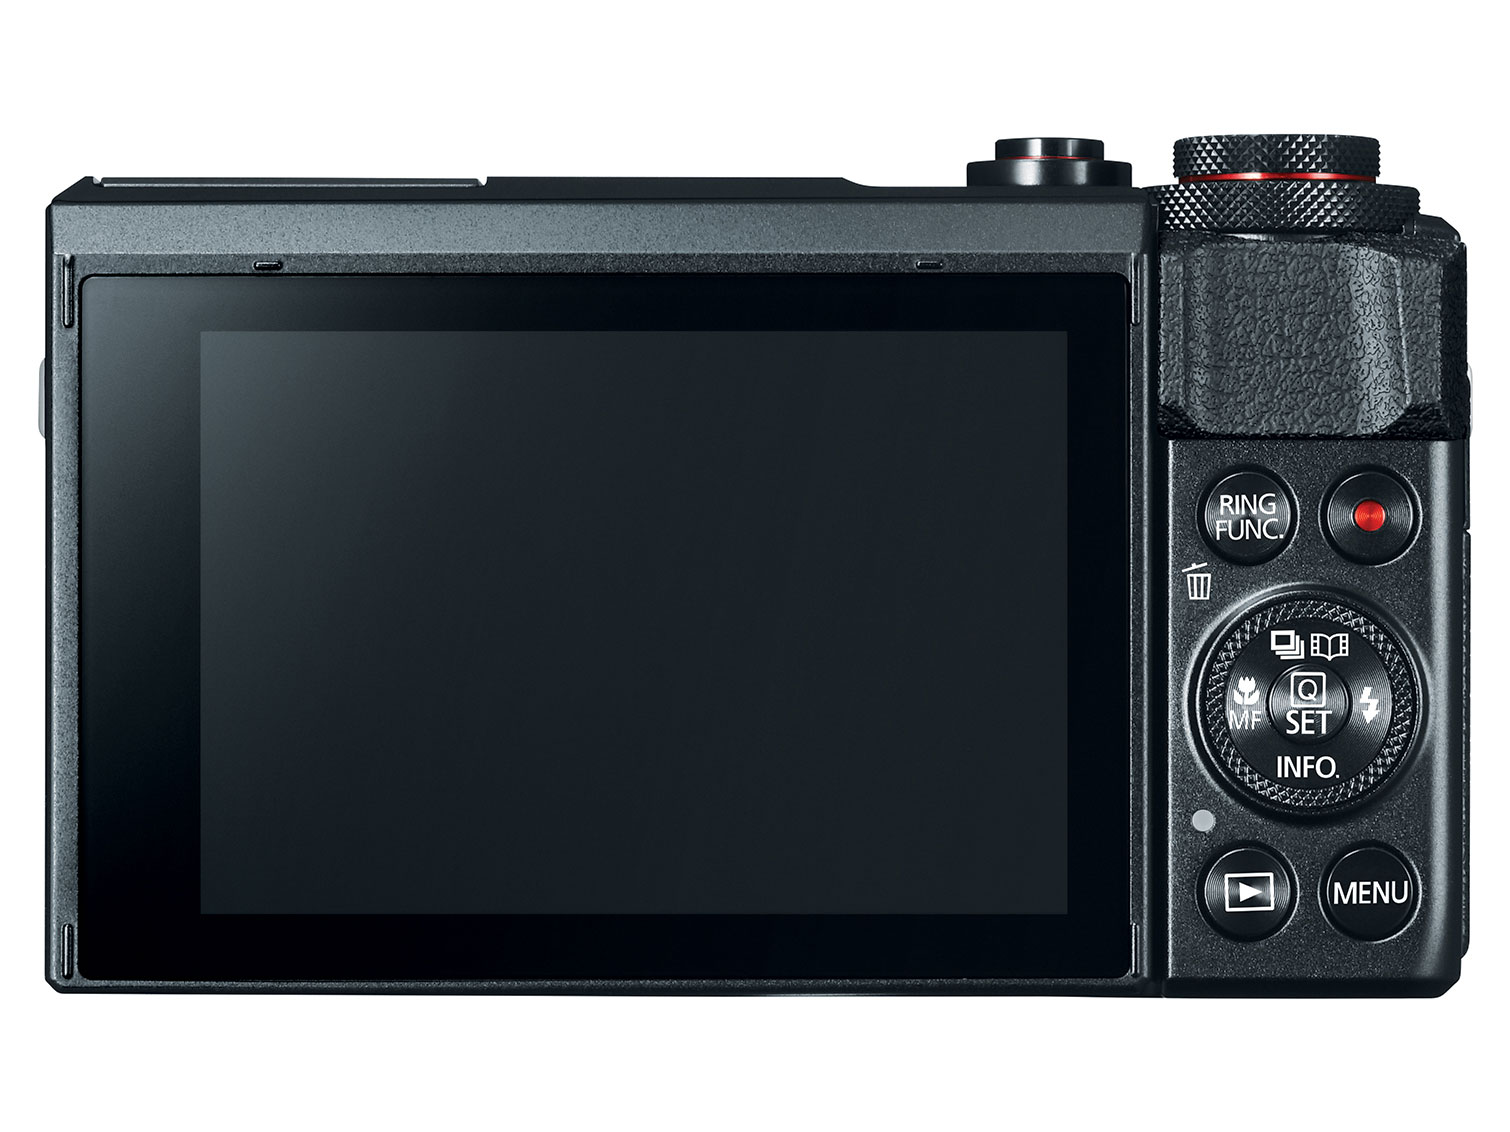 Canon PowerShot G7 X Mark II | Digital Photography Live